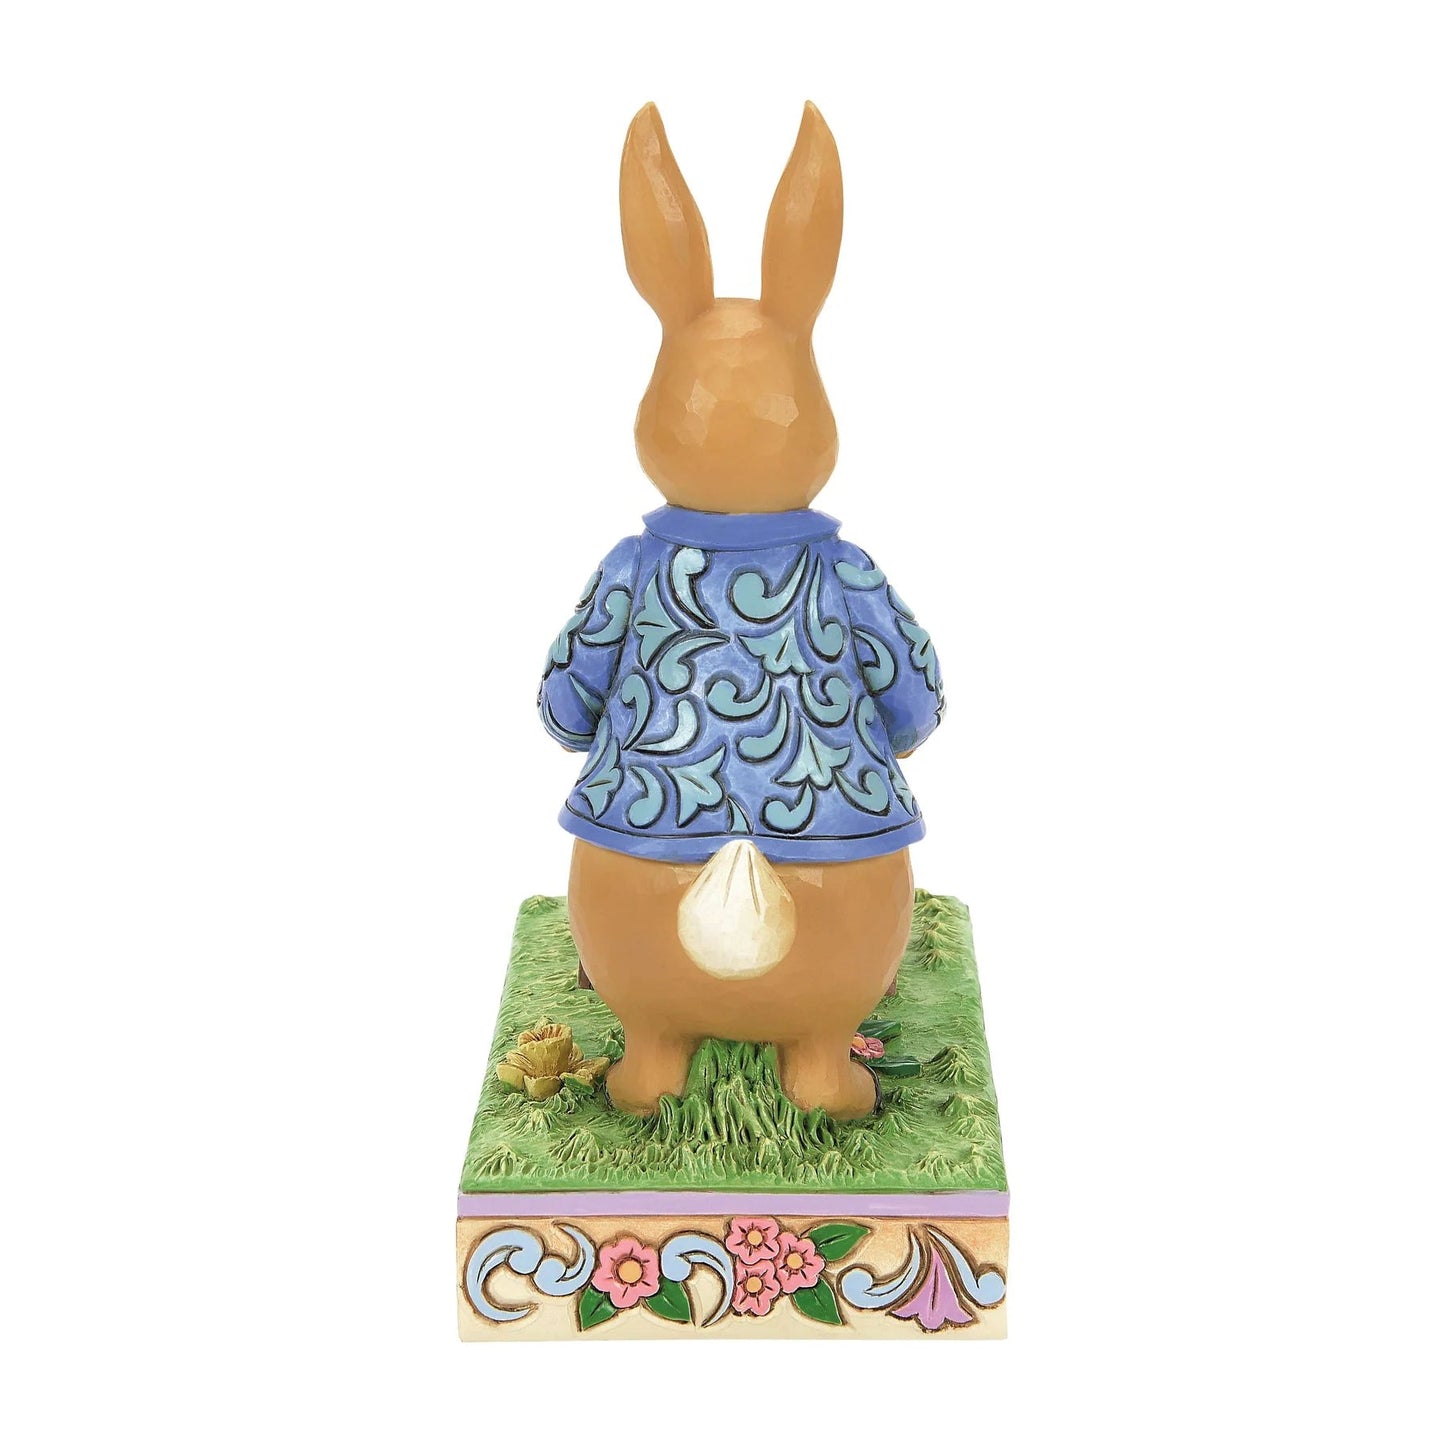 Jim Shore Heartwood Creek Peter Rabbit with Wheelbarrow Figurine, 6.3"